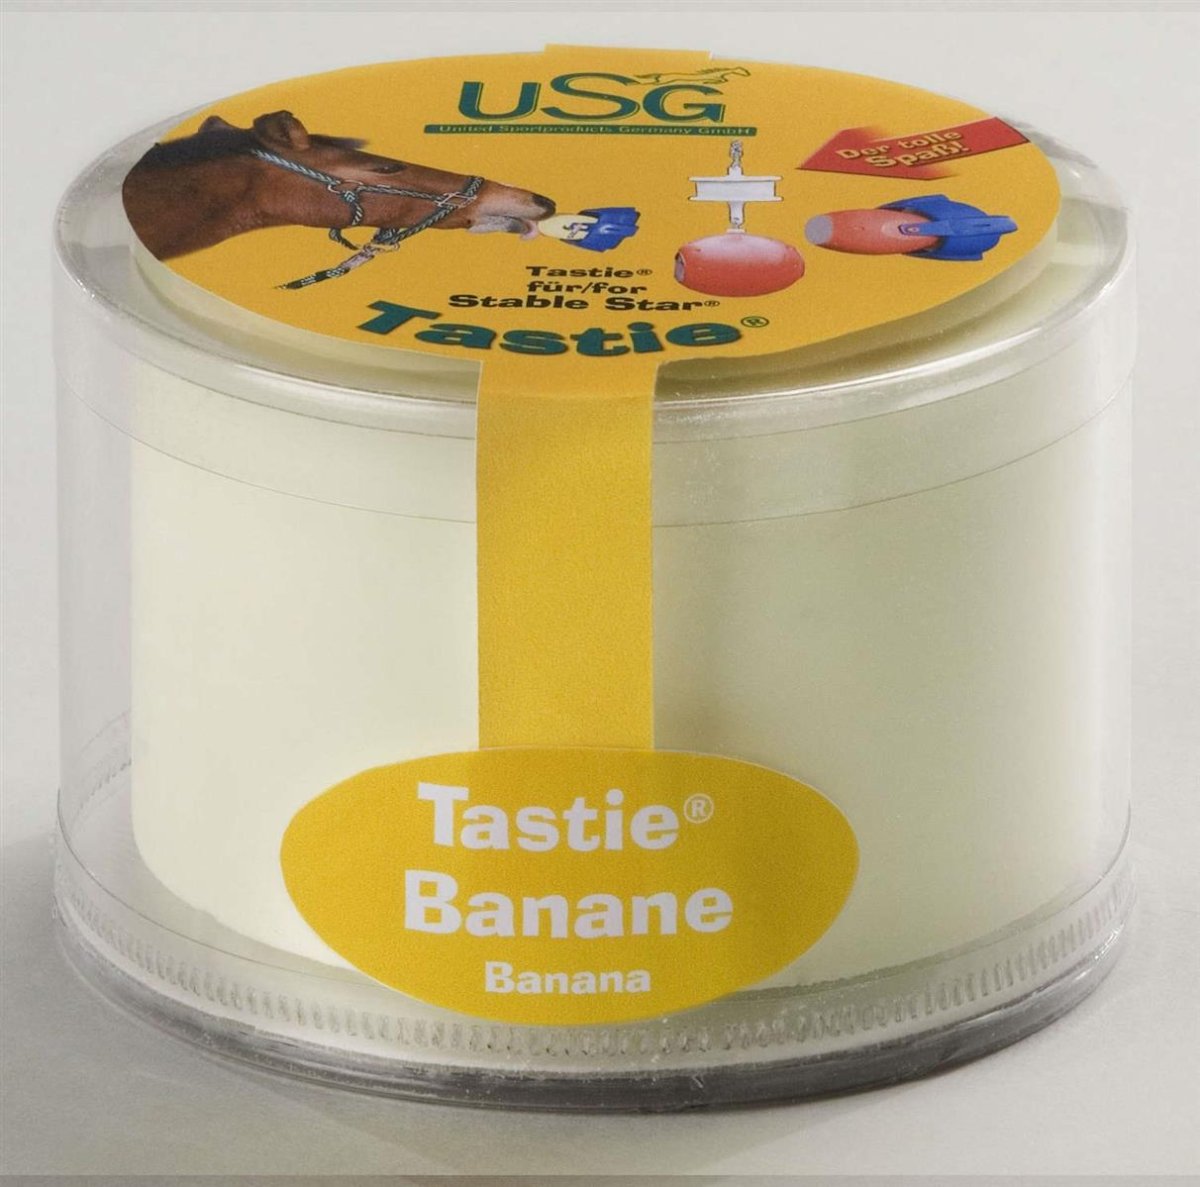 USG Big Tasties 650g Banane